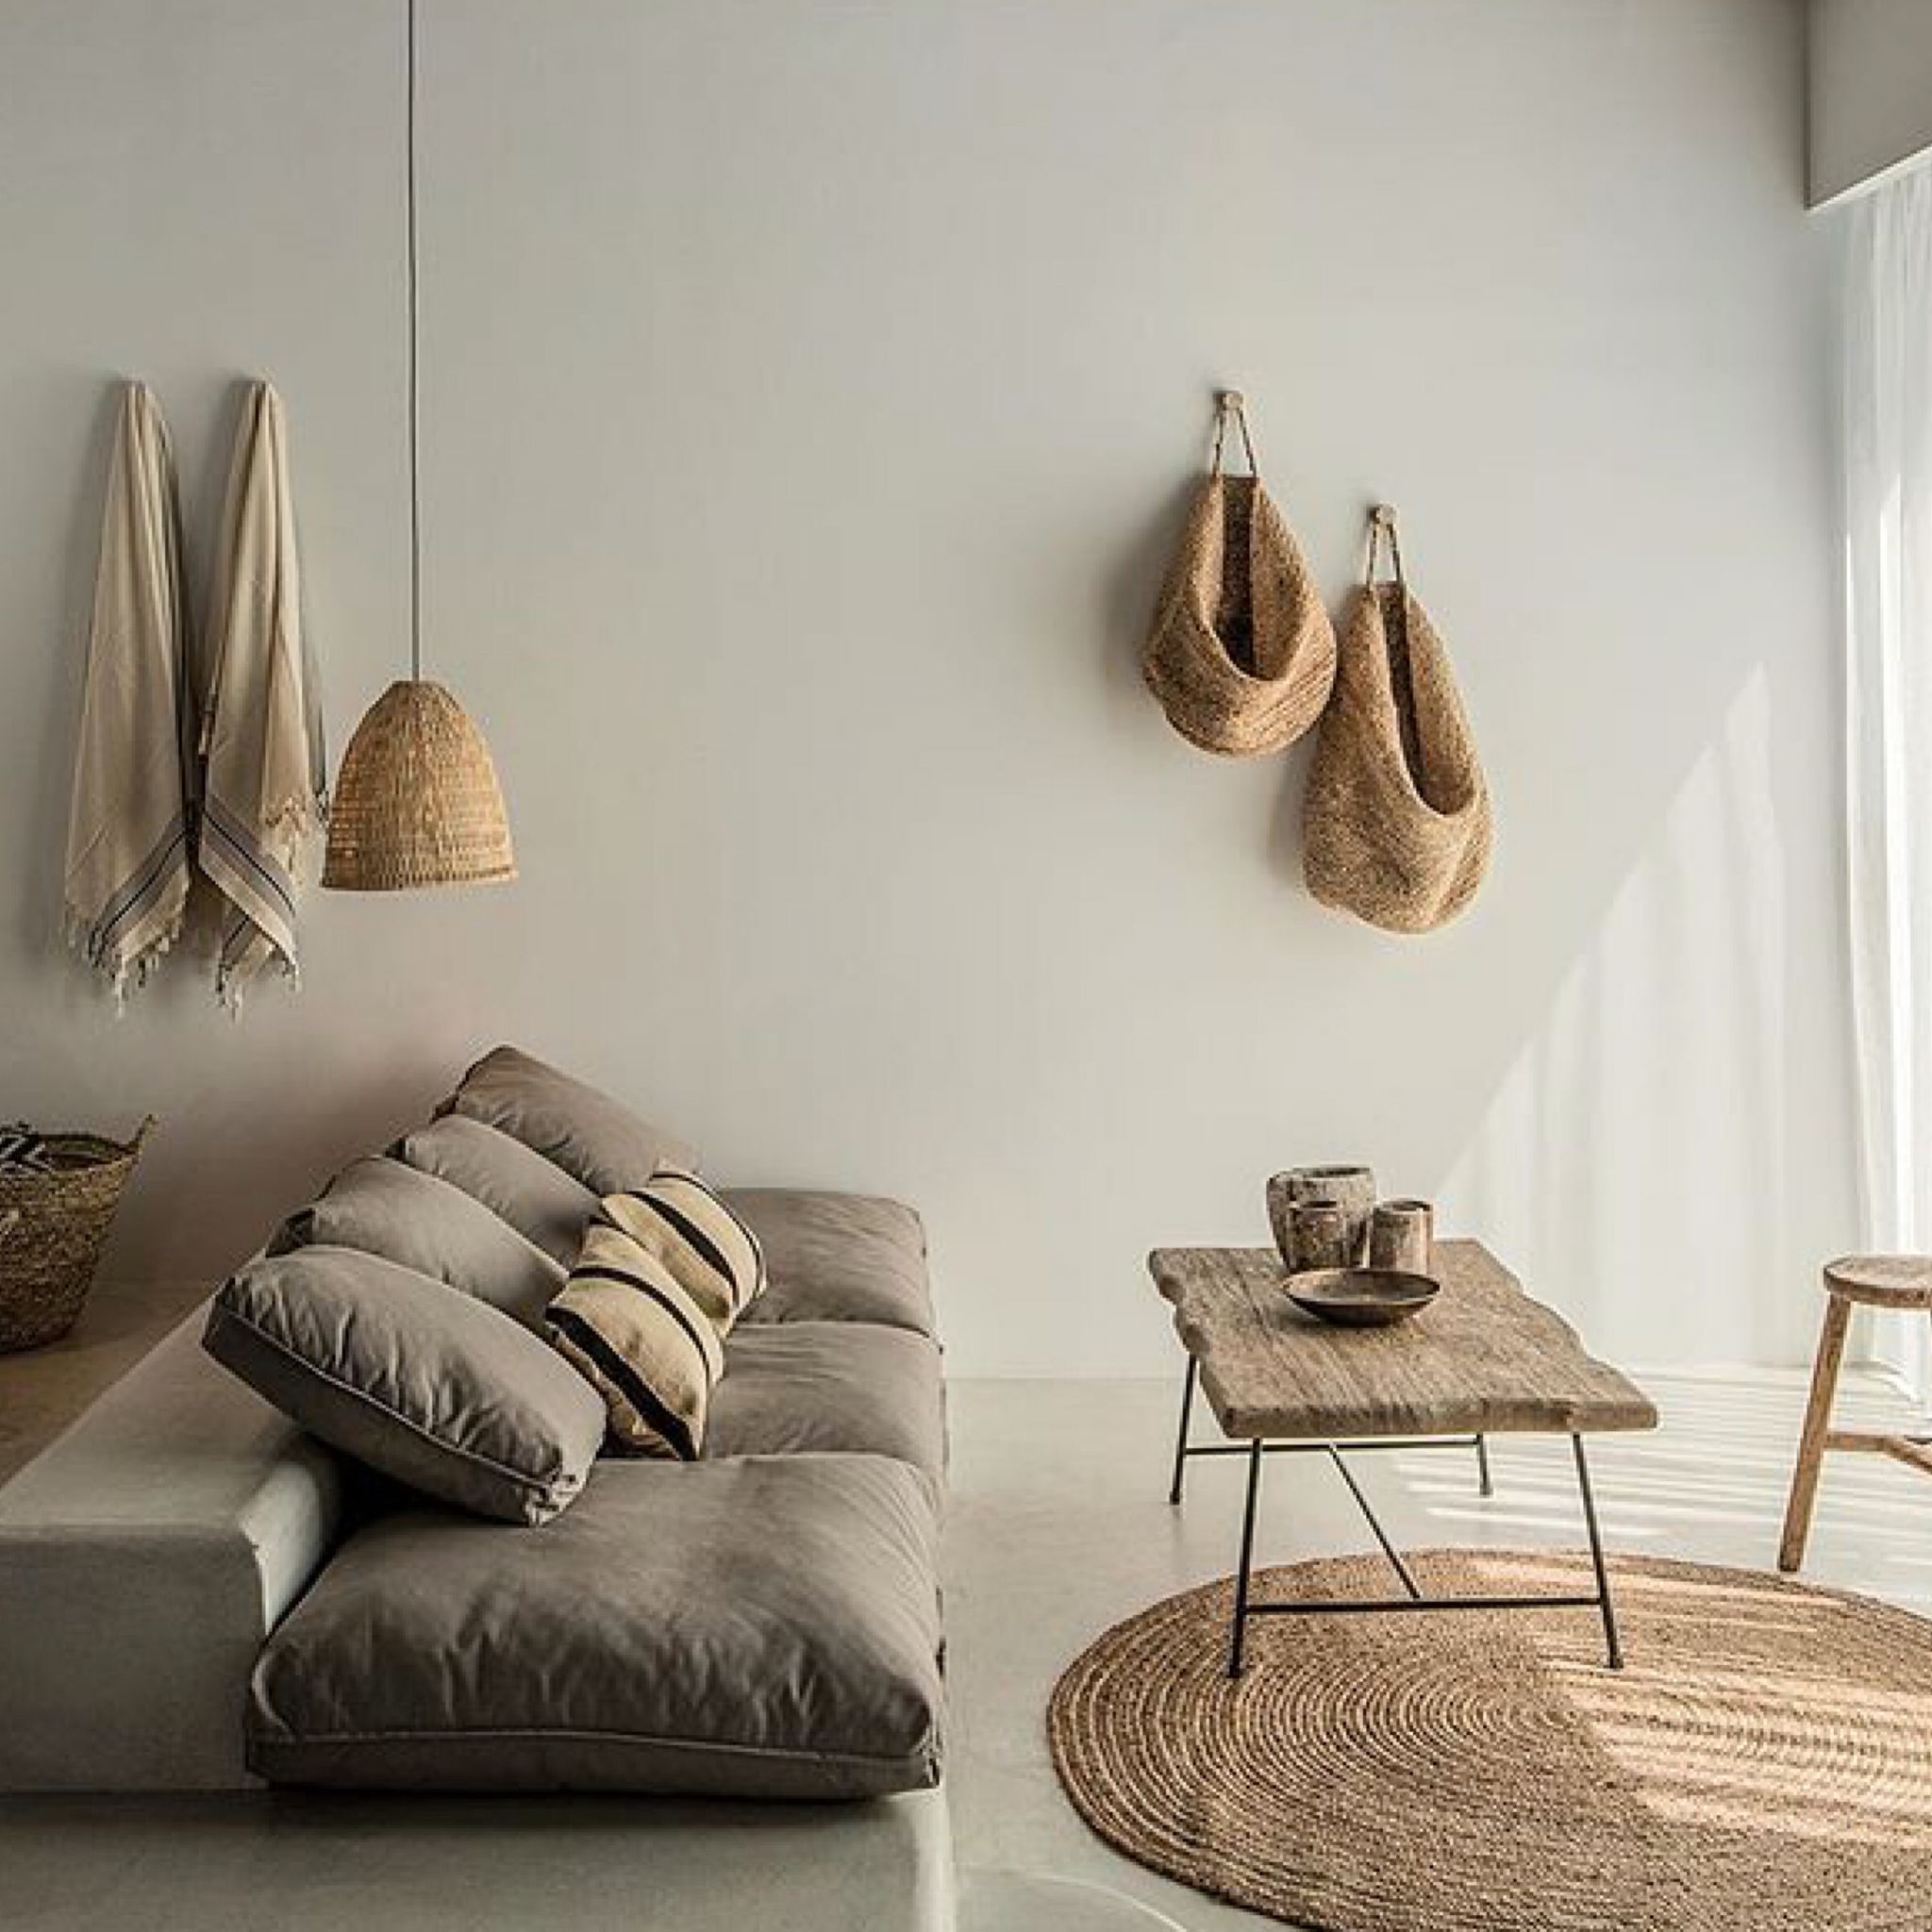 Minimal linen wood organic interior decor and design. Home decoration inspiration. Minimalist living.